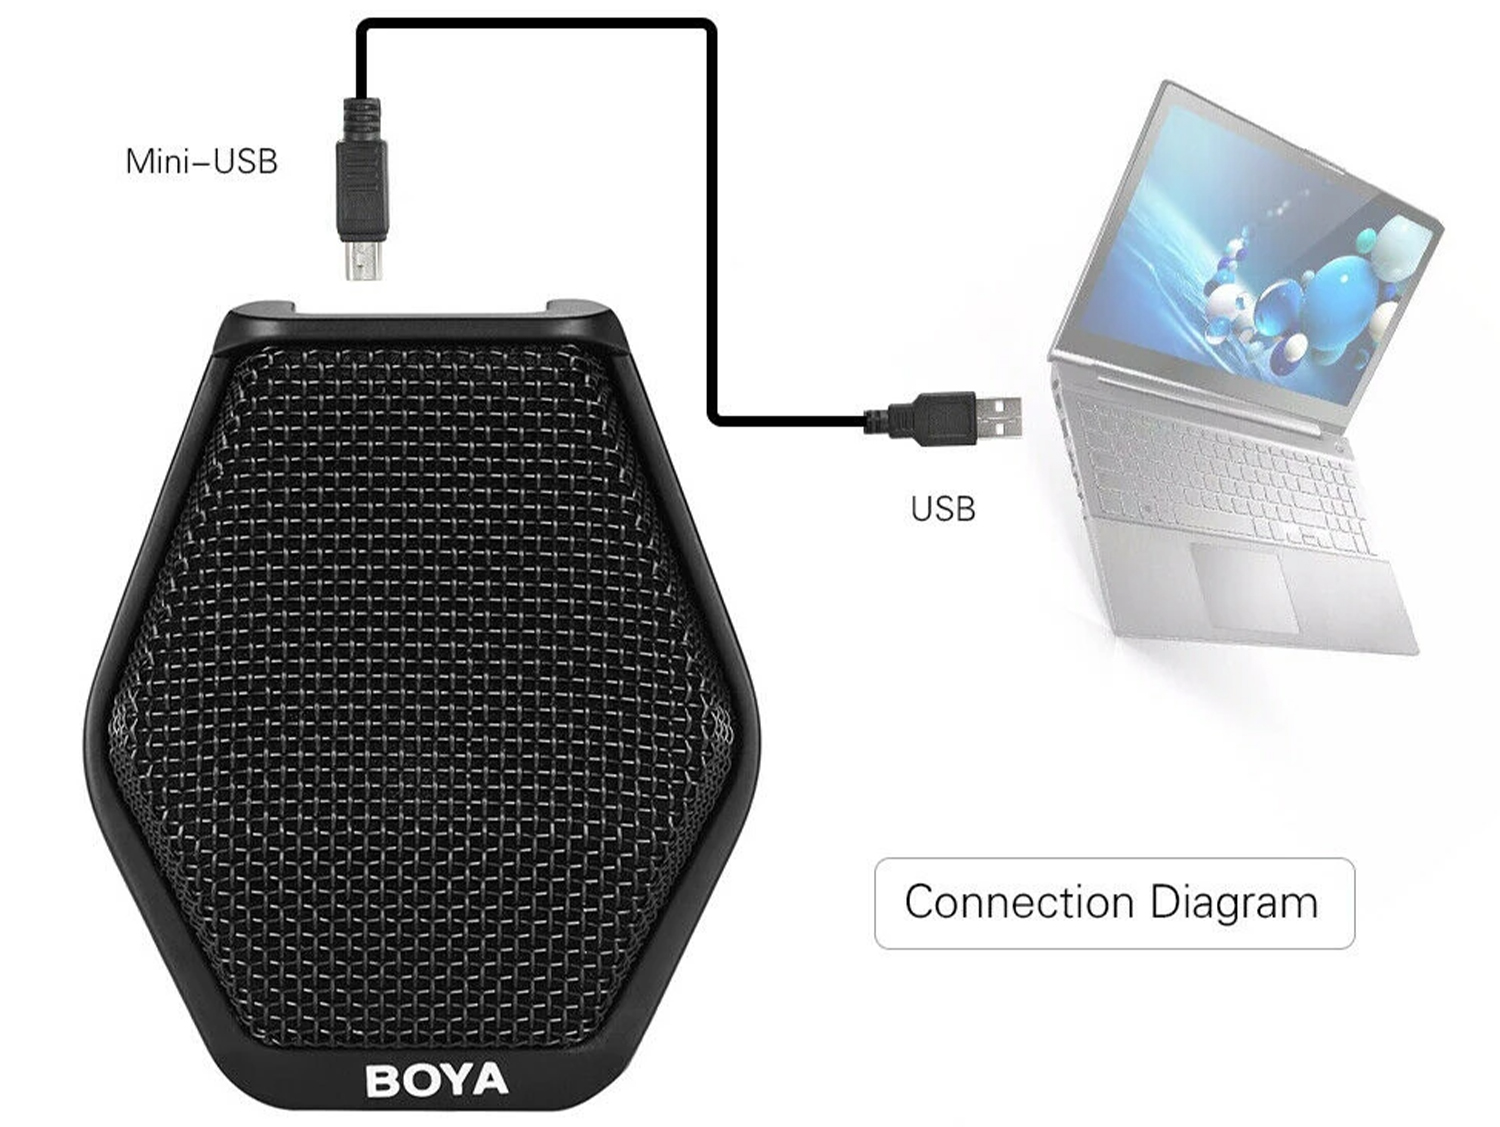 BOYA BY-MC2 USB Condenser Desktop Conference Computer Microphone